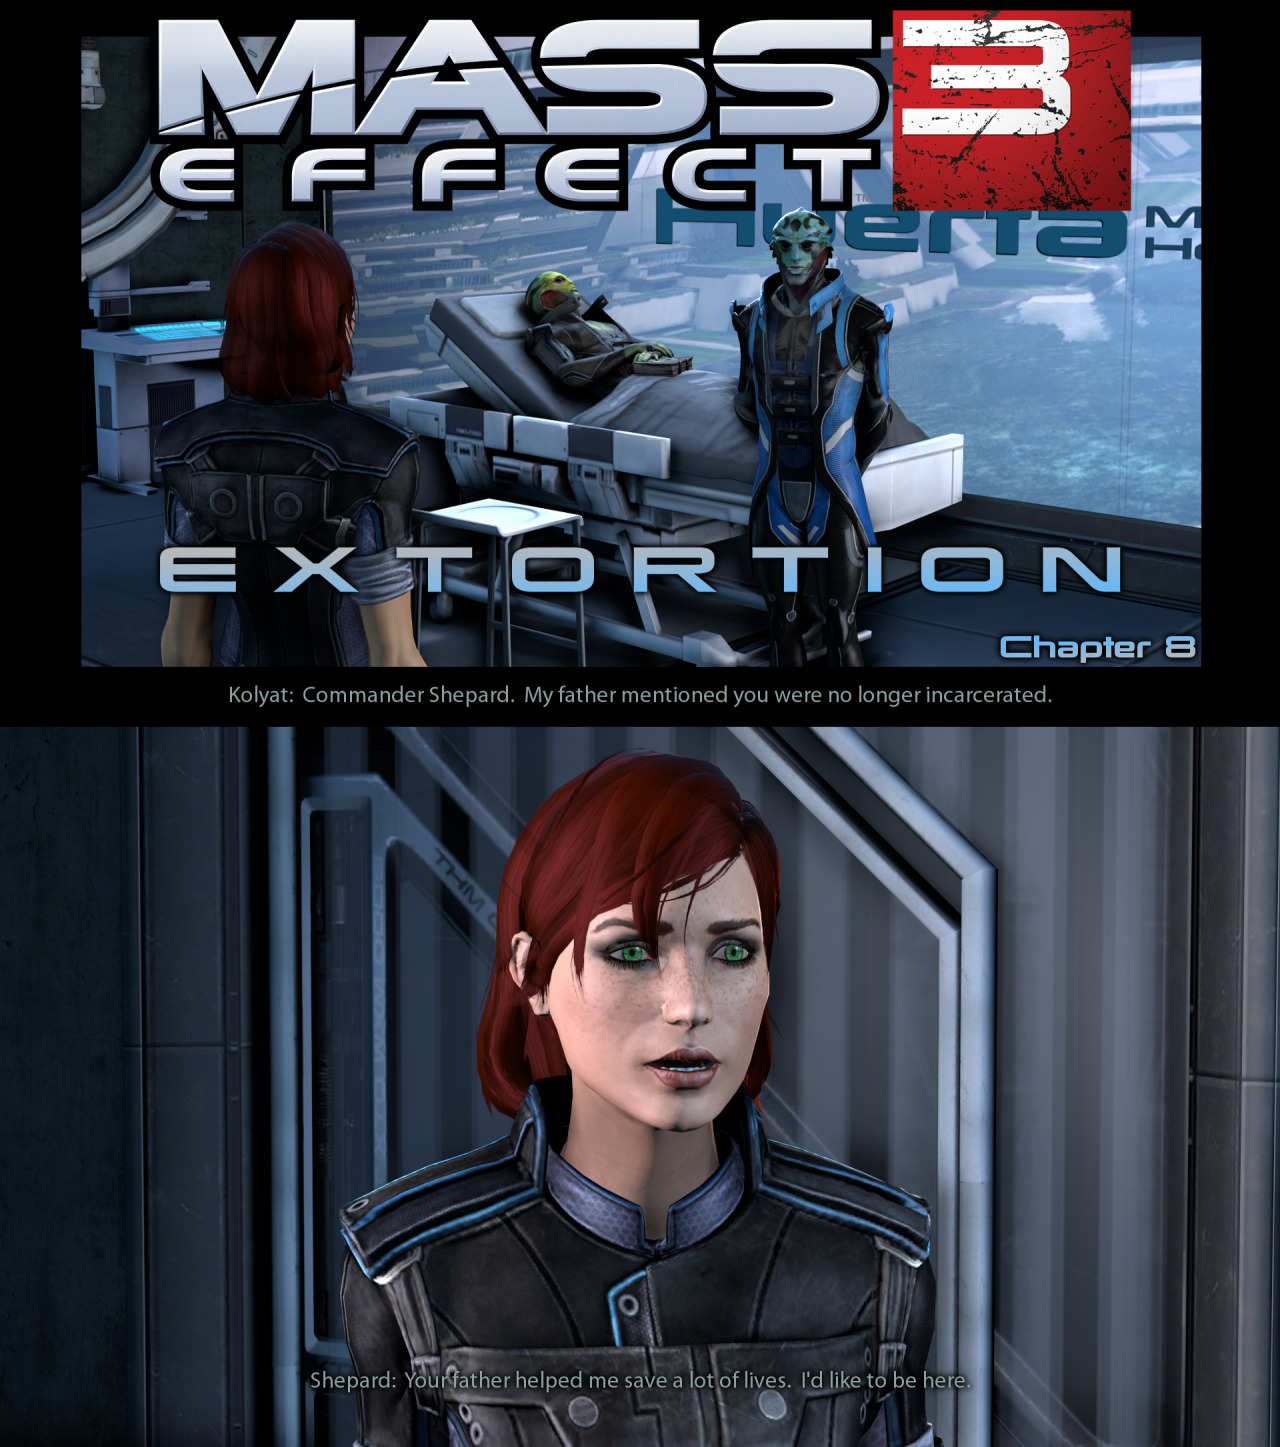 Mass Effect 3: Extortion Chapter 8: Huerta Memorial Hospital  1920x1080 pics at: